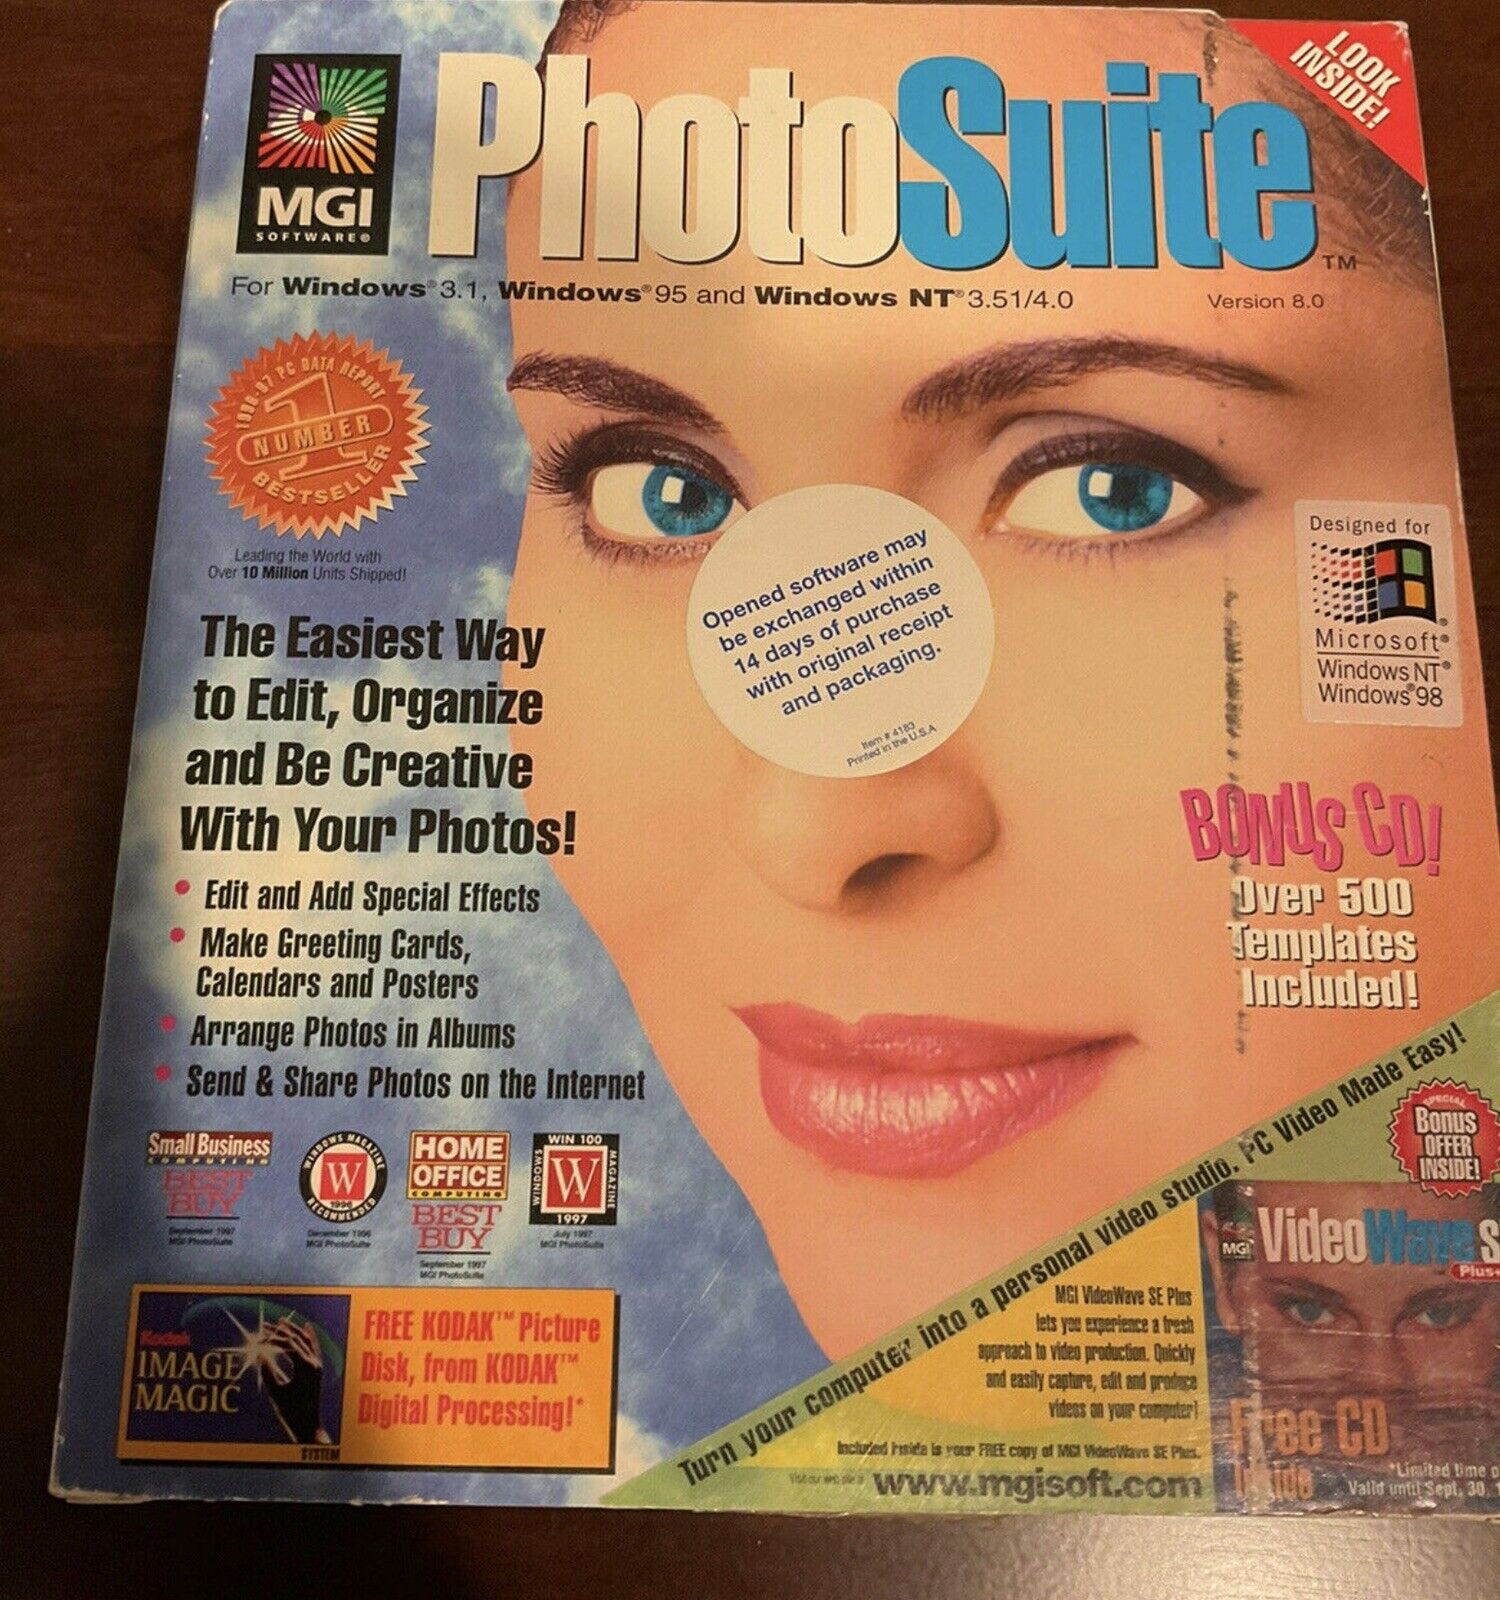 Vintage MGI PhotoSuite Software Version 8.0 for Windows 3.1, 95,NT-3.51/4.0, 98